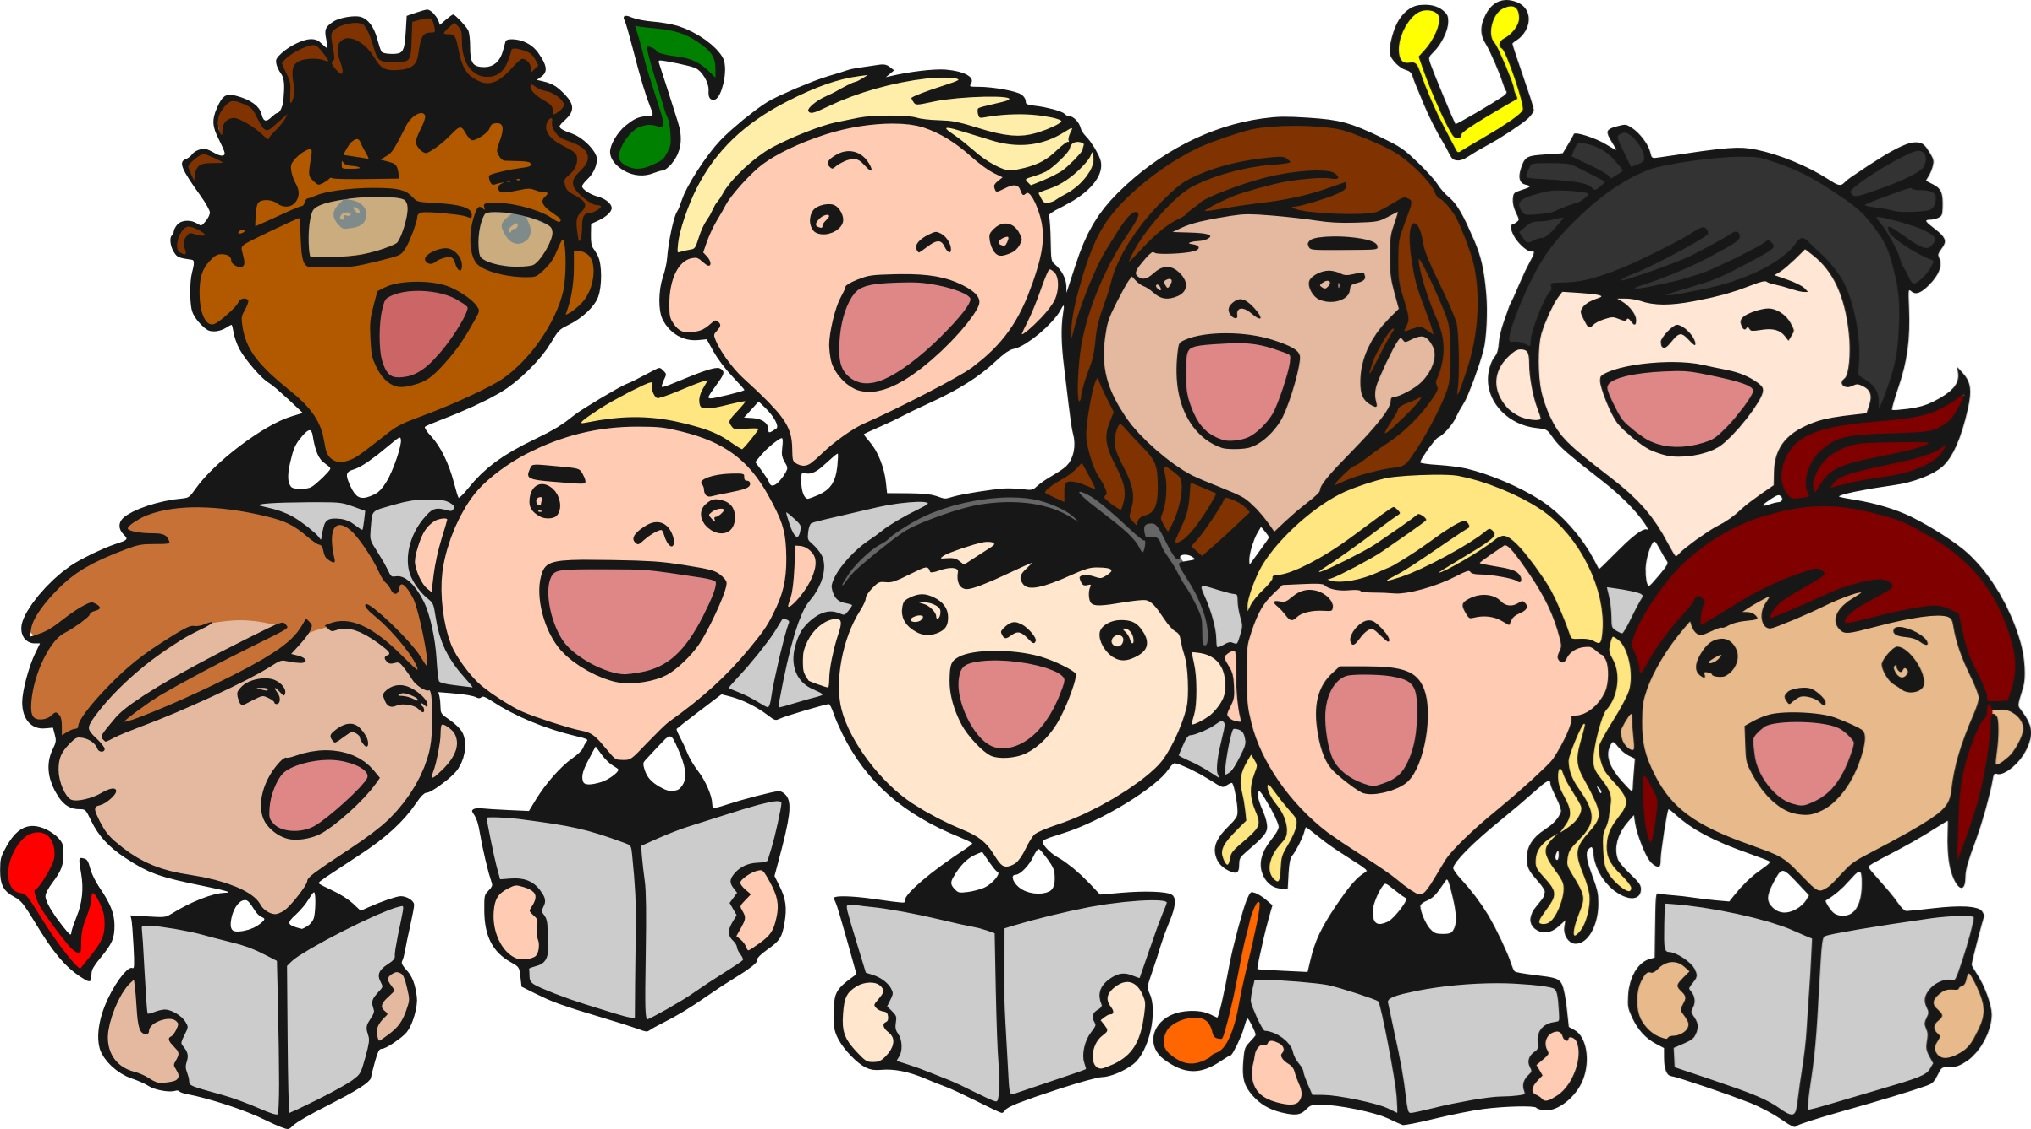 Children singing